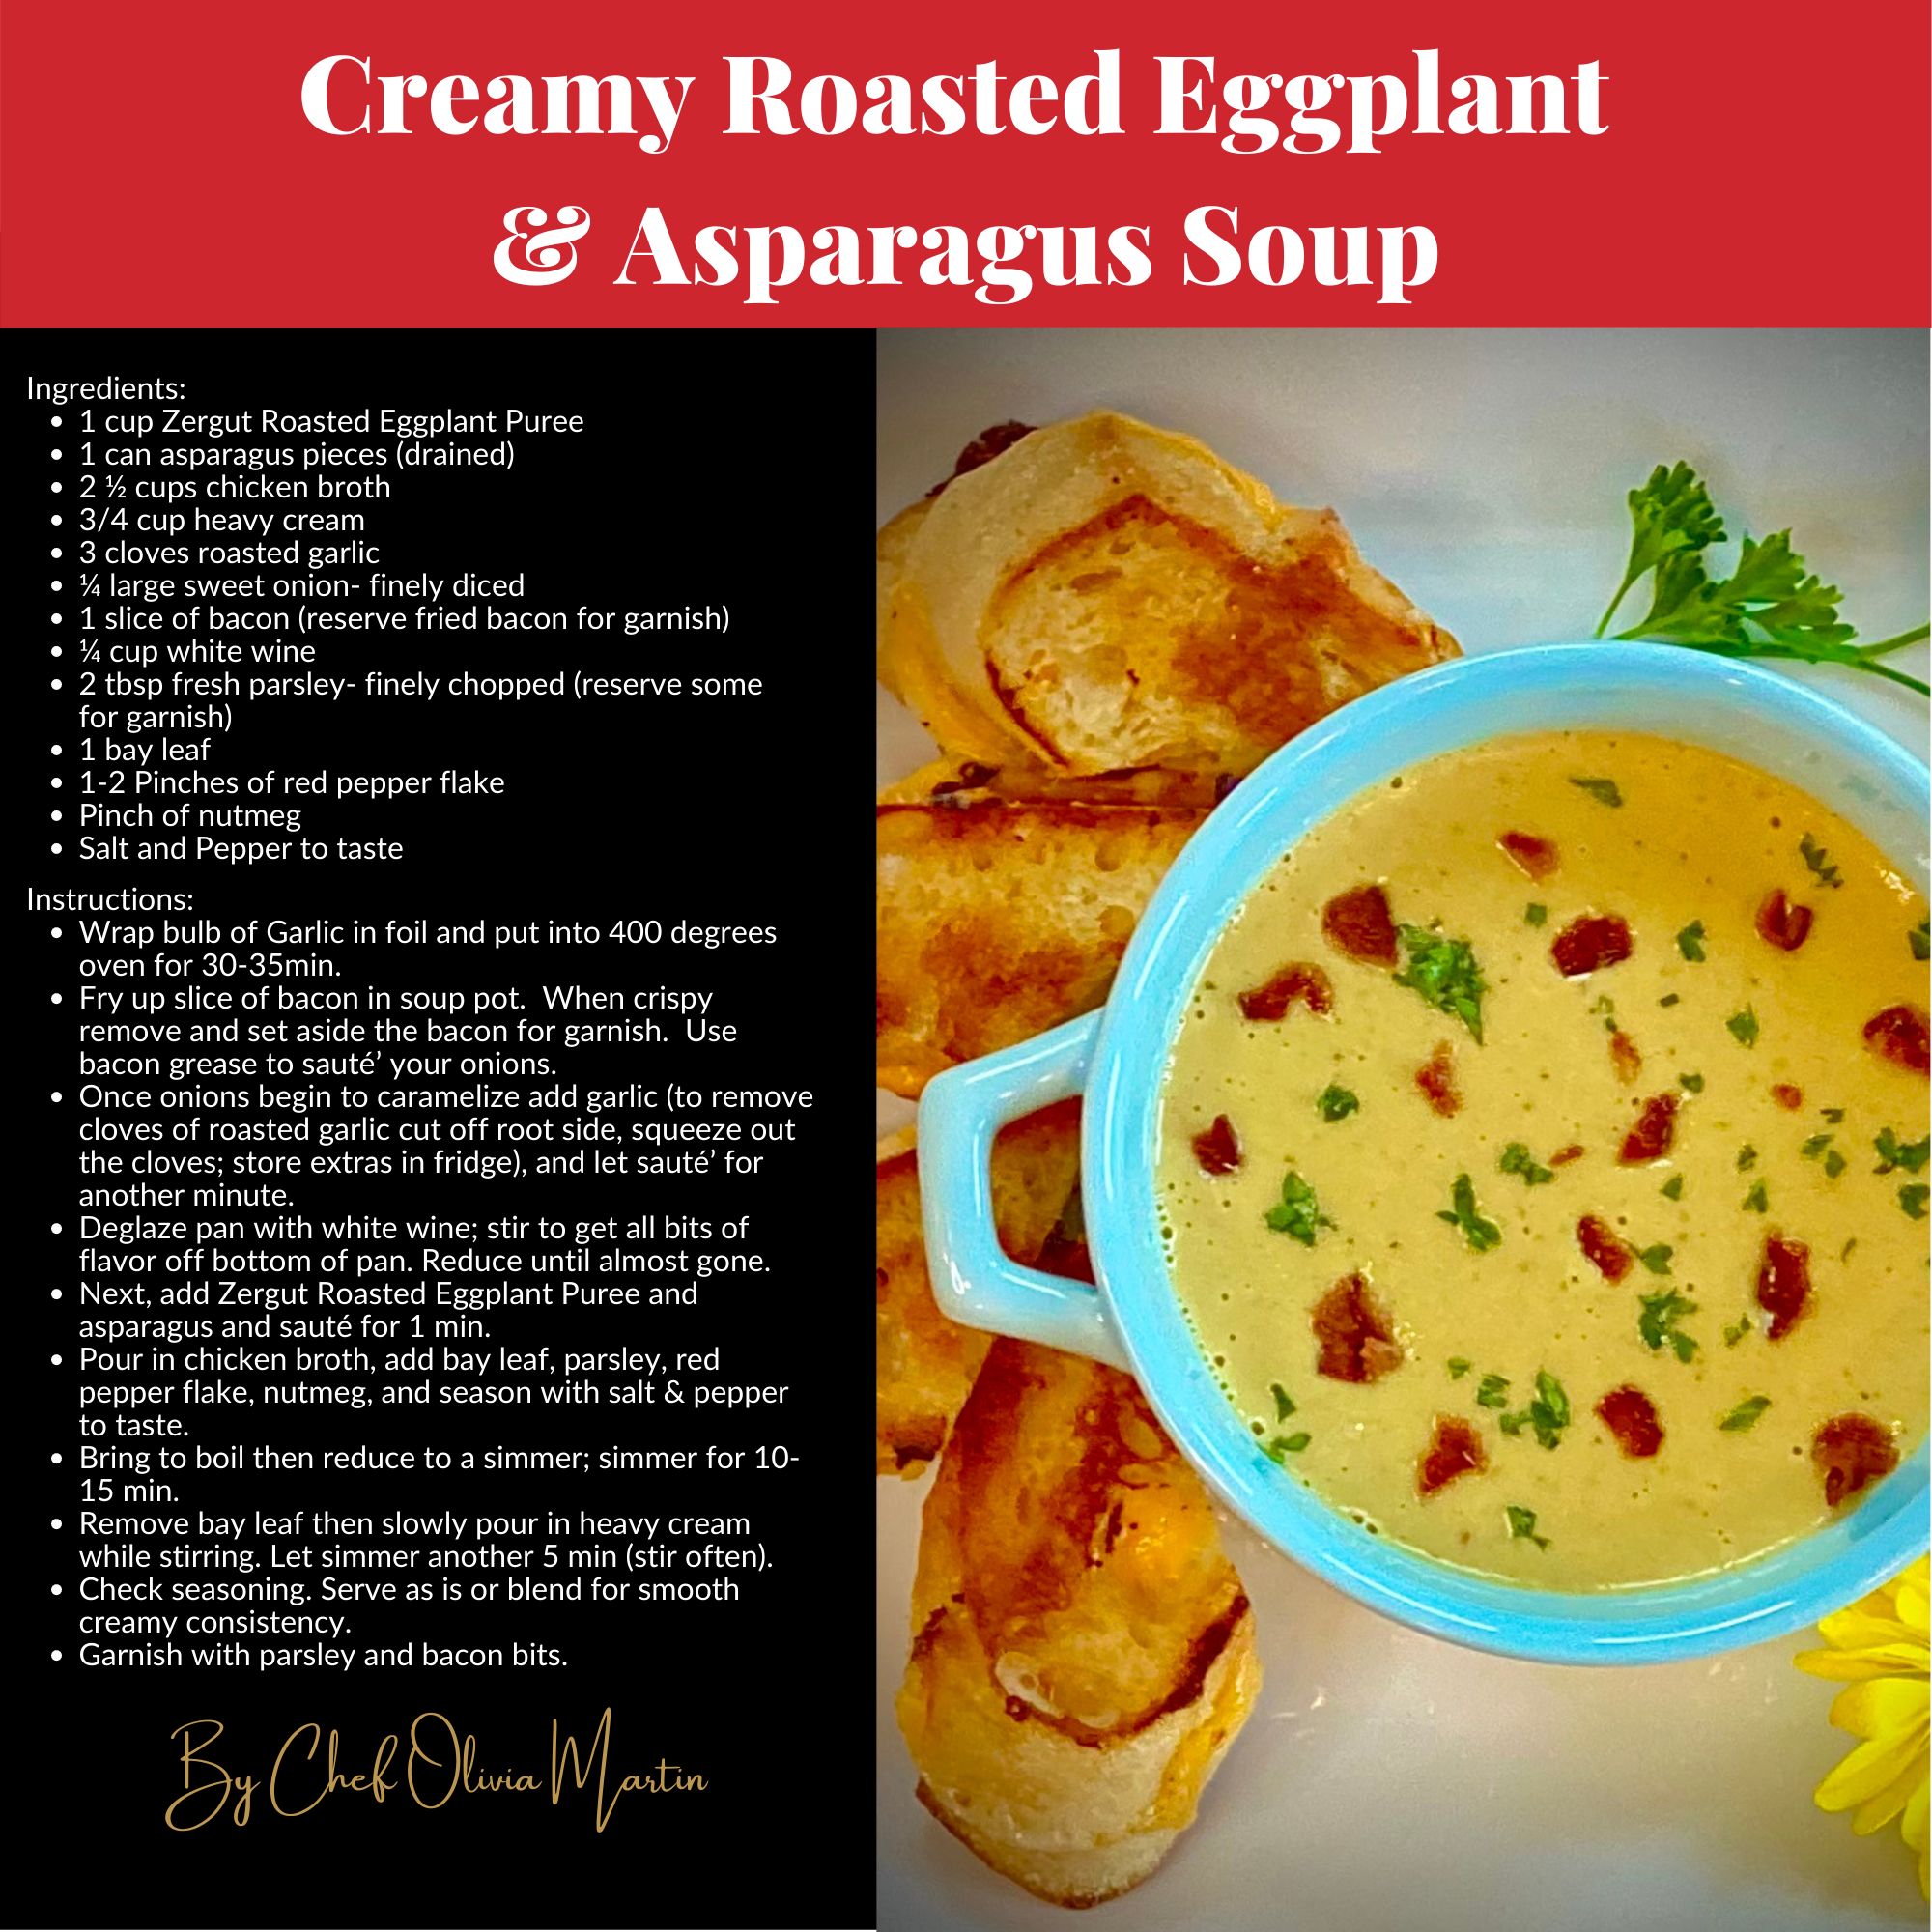 Creamy Roasted Eggplant & Asparagus Soup Recipe